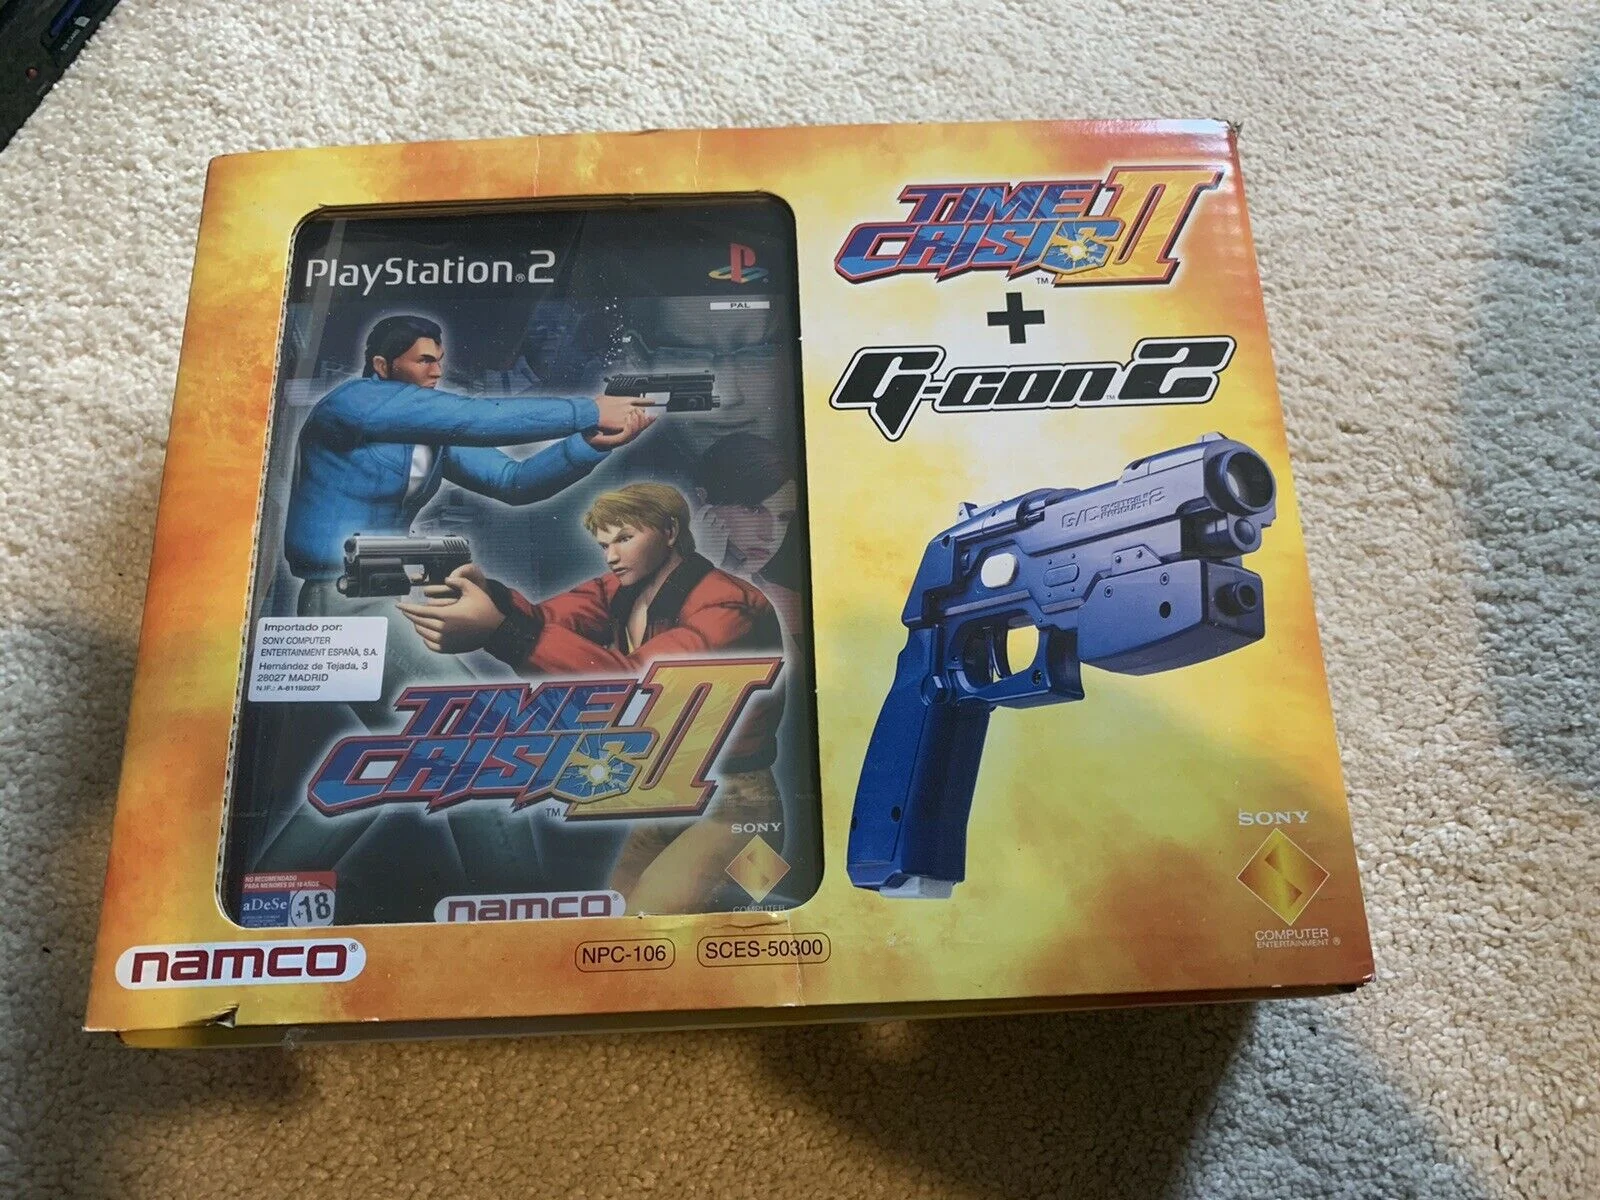  Namco PlayStation 2 Time Crisis 2 G-Con 2 Gun Bundle